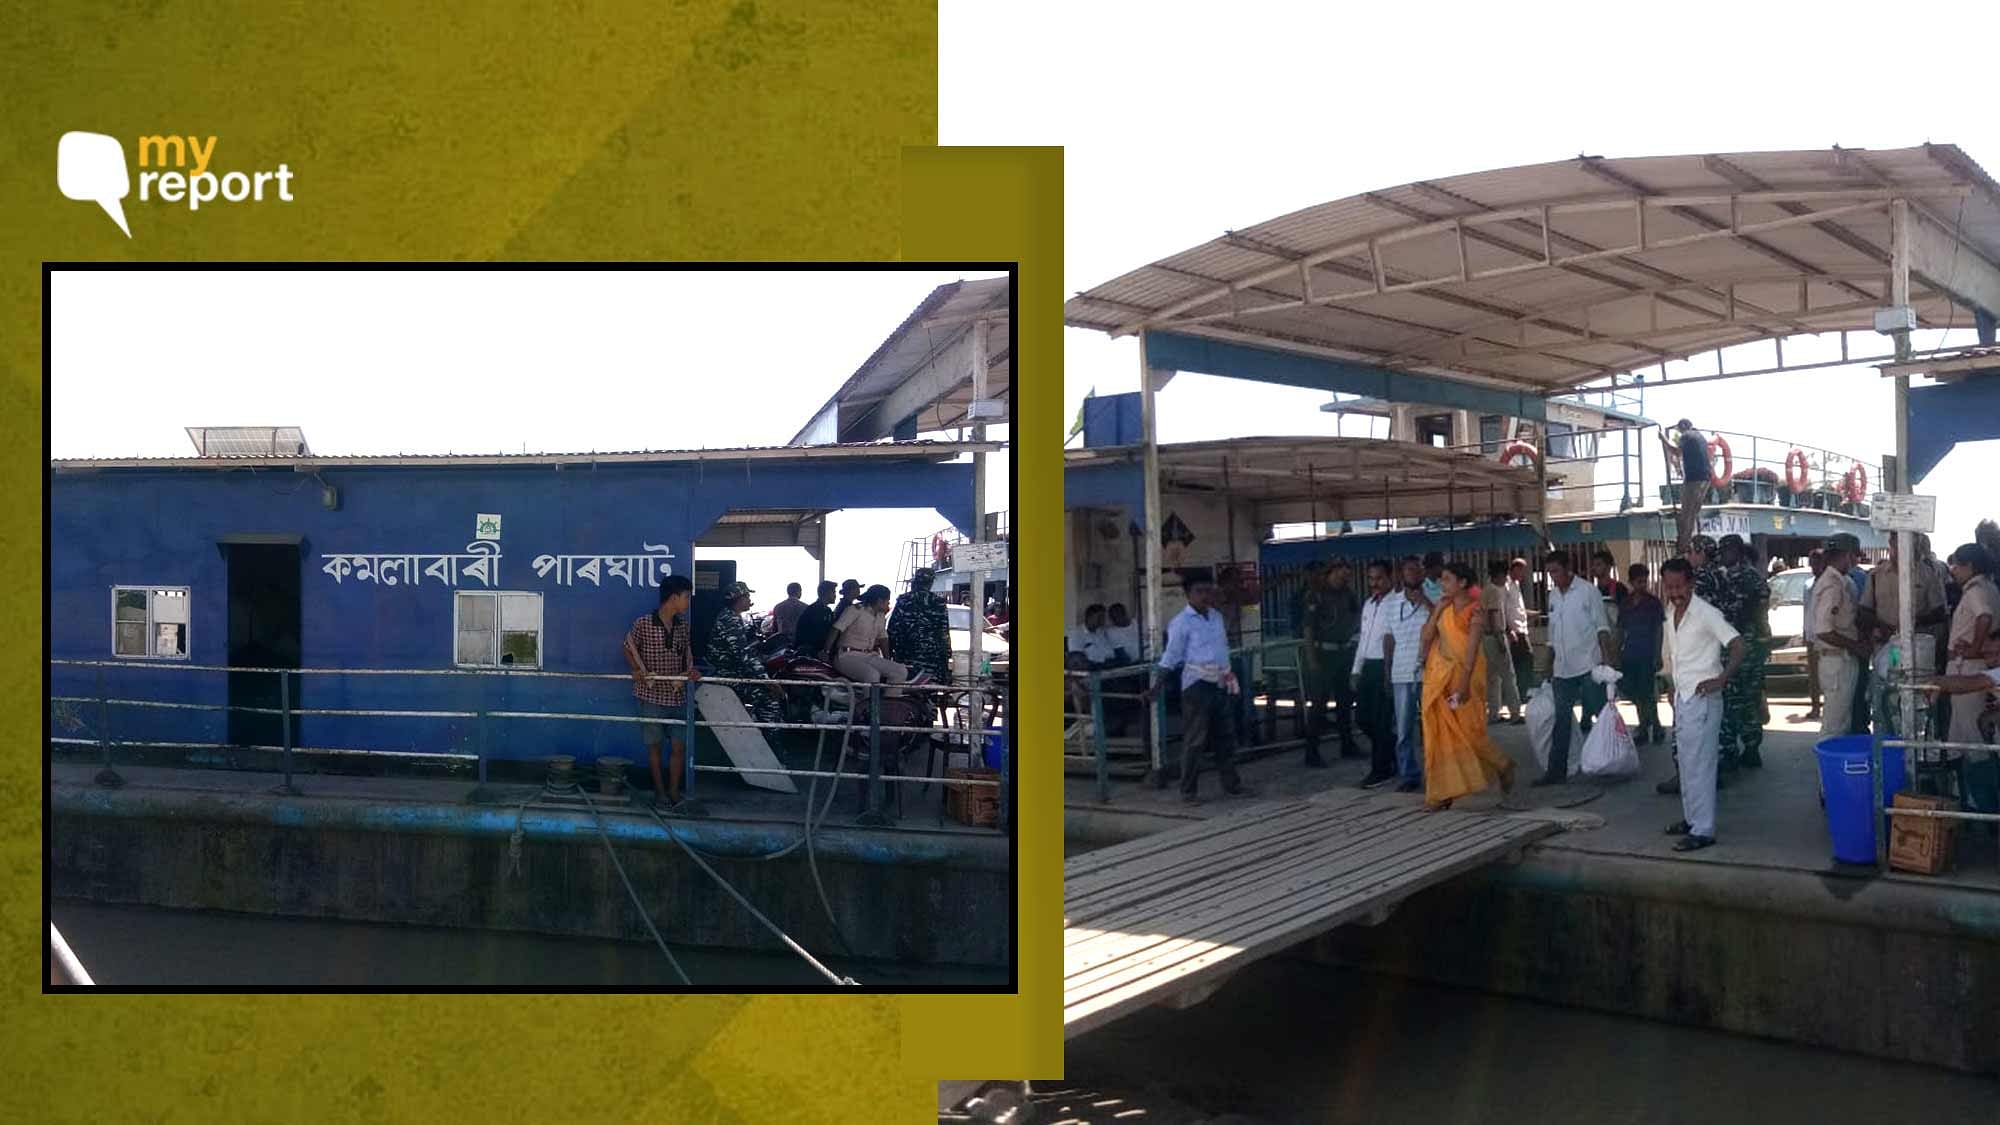 <div class="paragraphs"><p>Ferries waiting at the Majuli Ghat.&nbsp;</p></div>